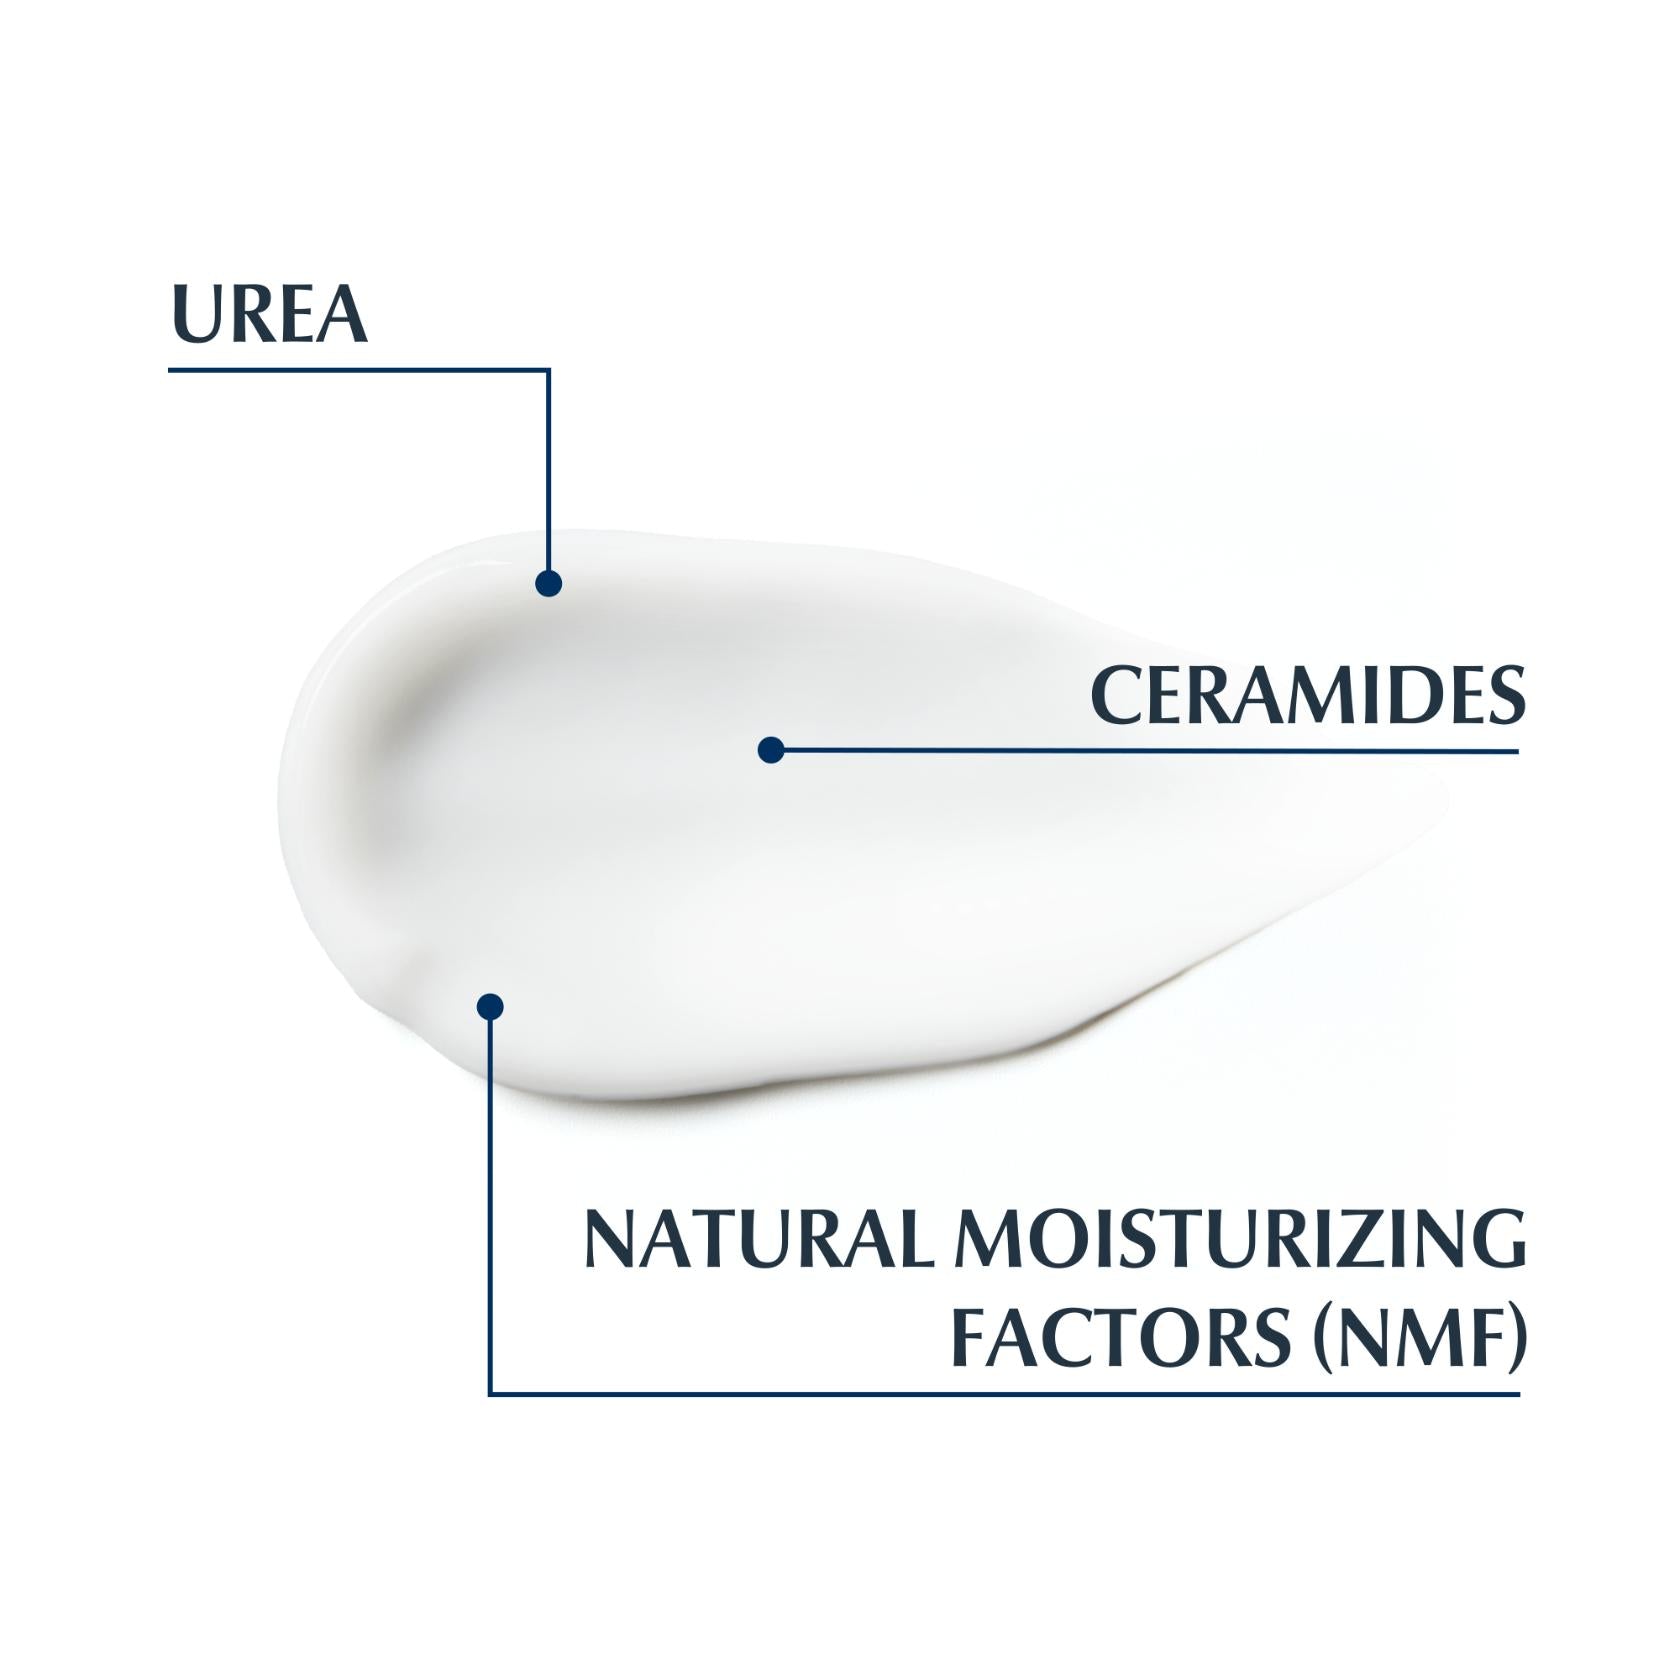 Eucerin UreaRepair Plus Hand Cream 5% Urea 75ml